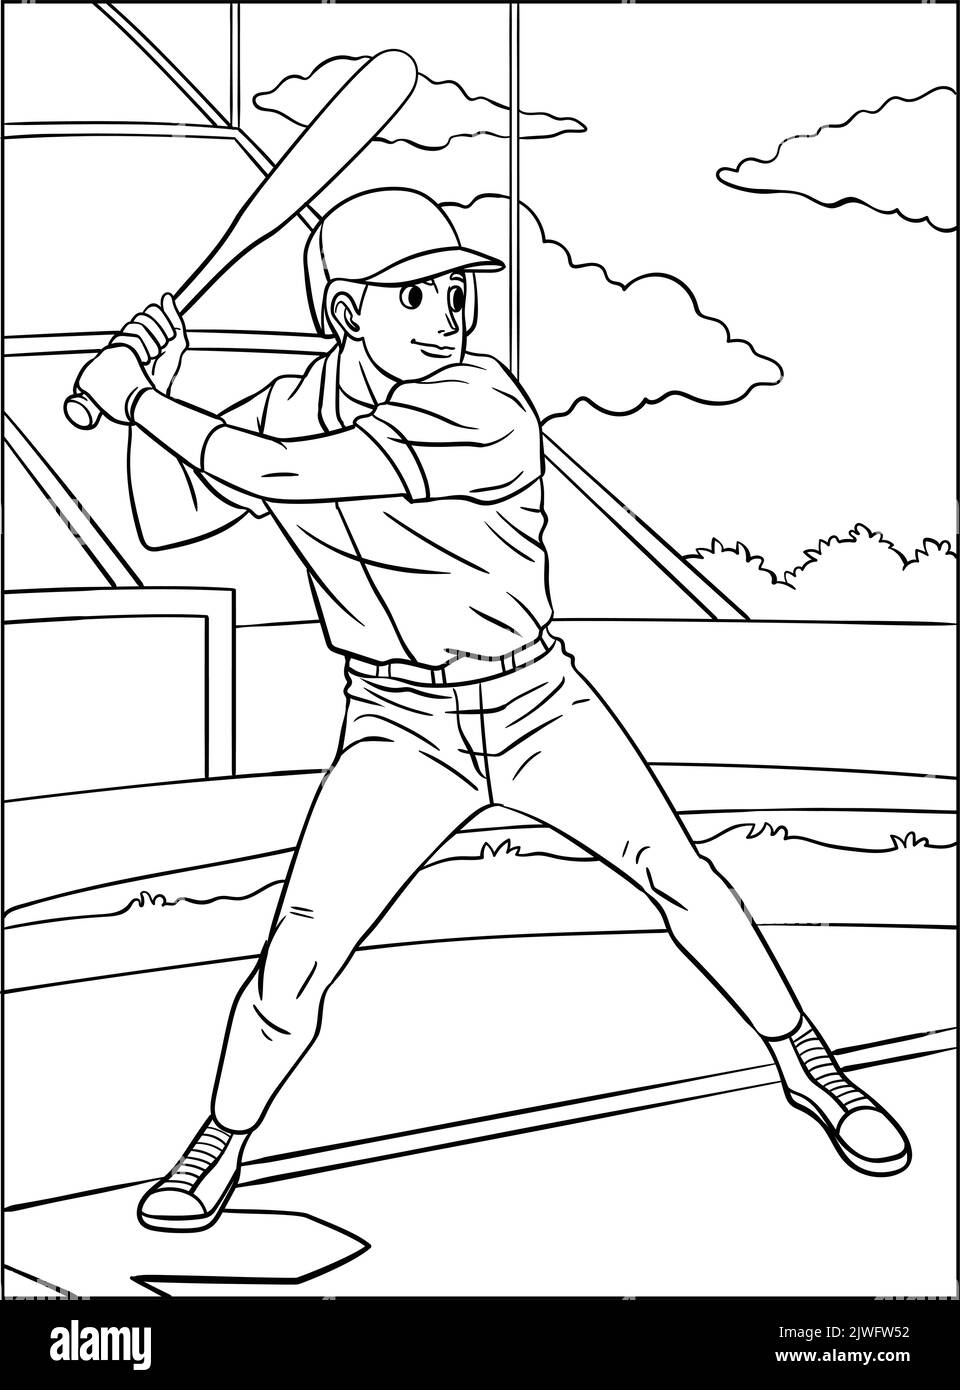 Baseball Coloring Page for Kids Stock Vector Image & Art - Alamy